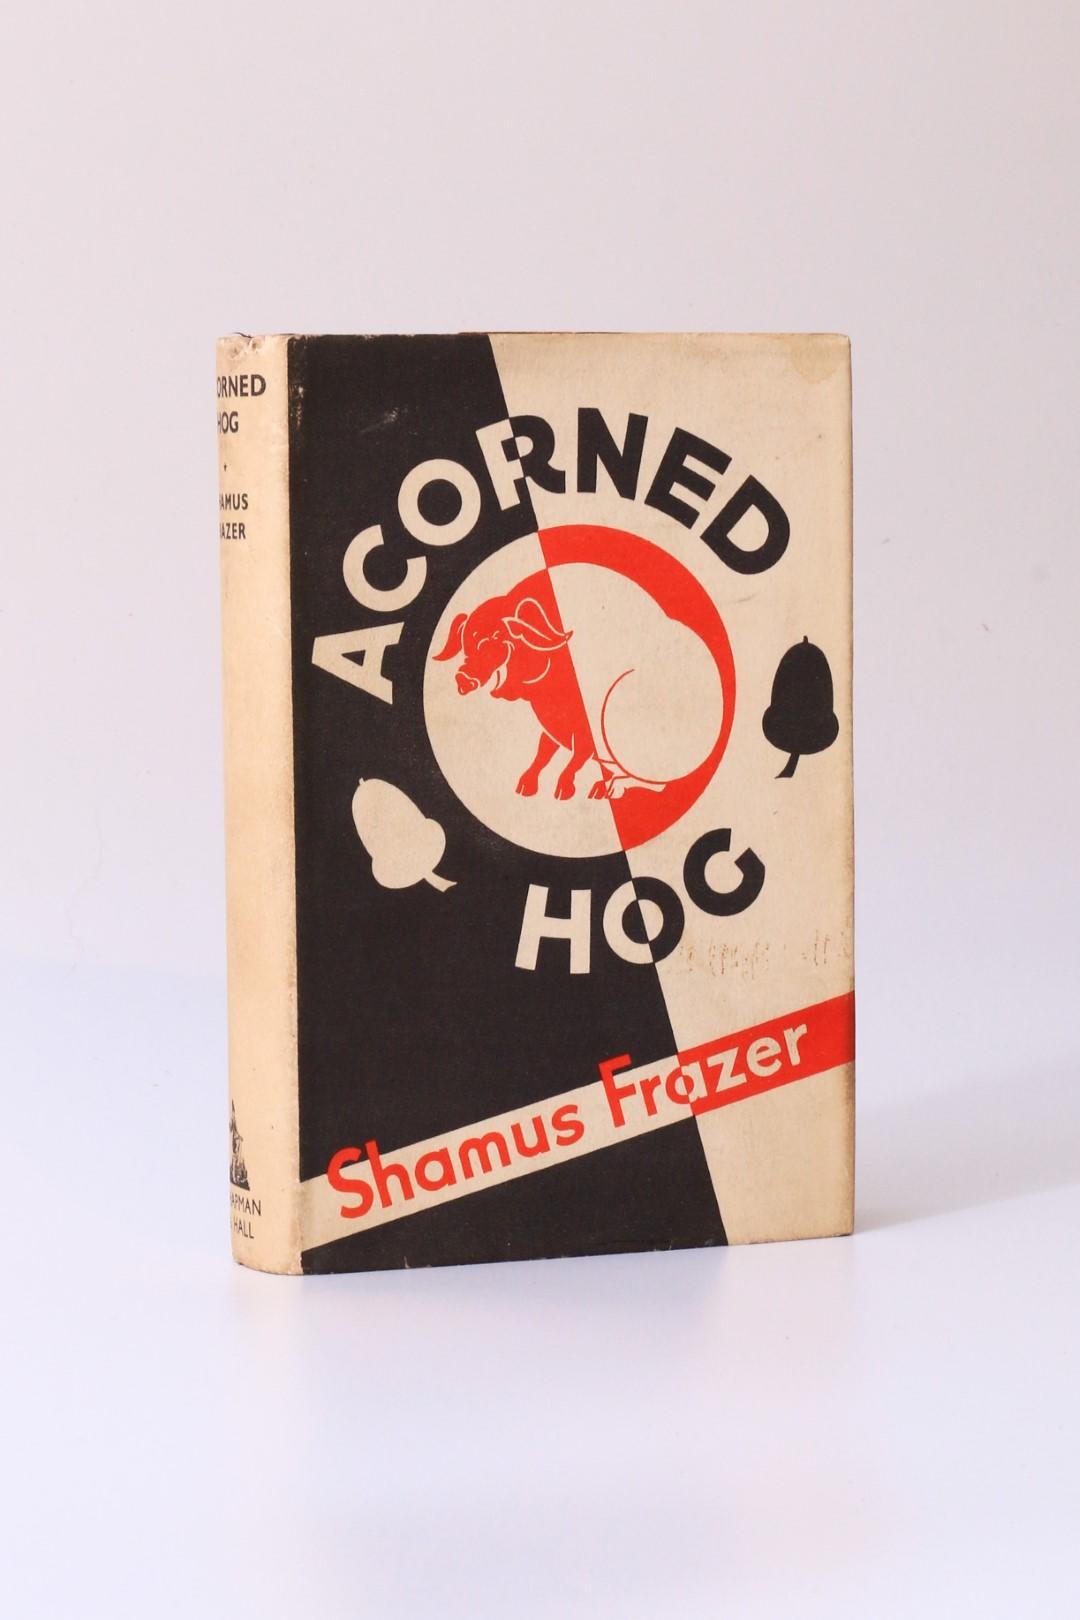 Shamus Frazer - Acorned Hog - Chapman & Hall, 1933, Signed First Edition.